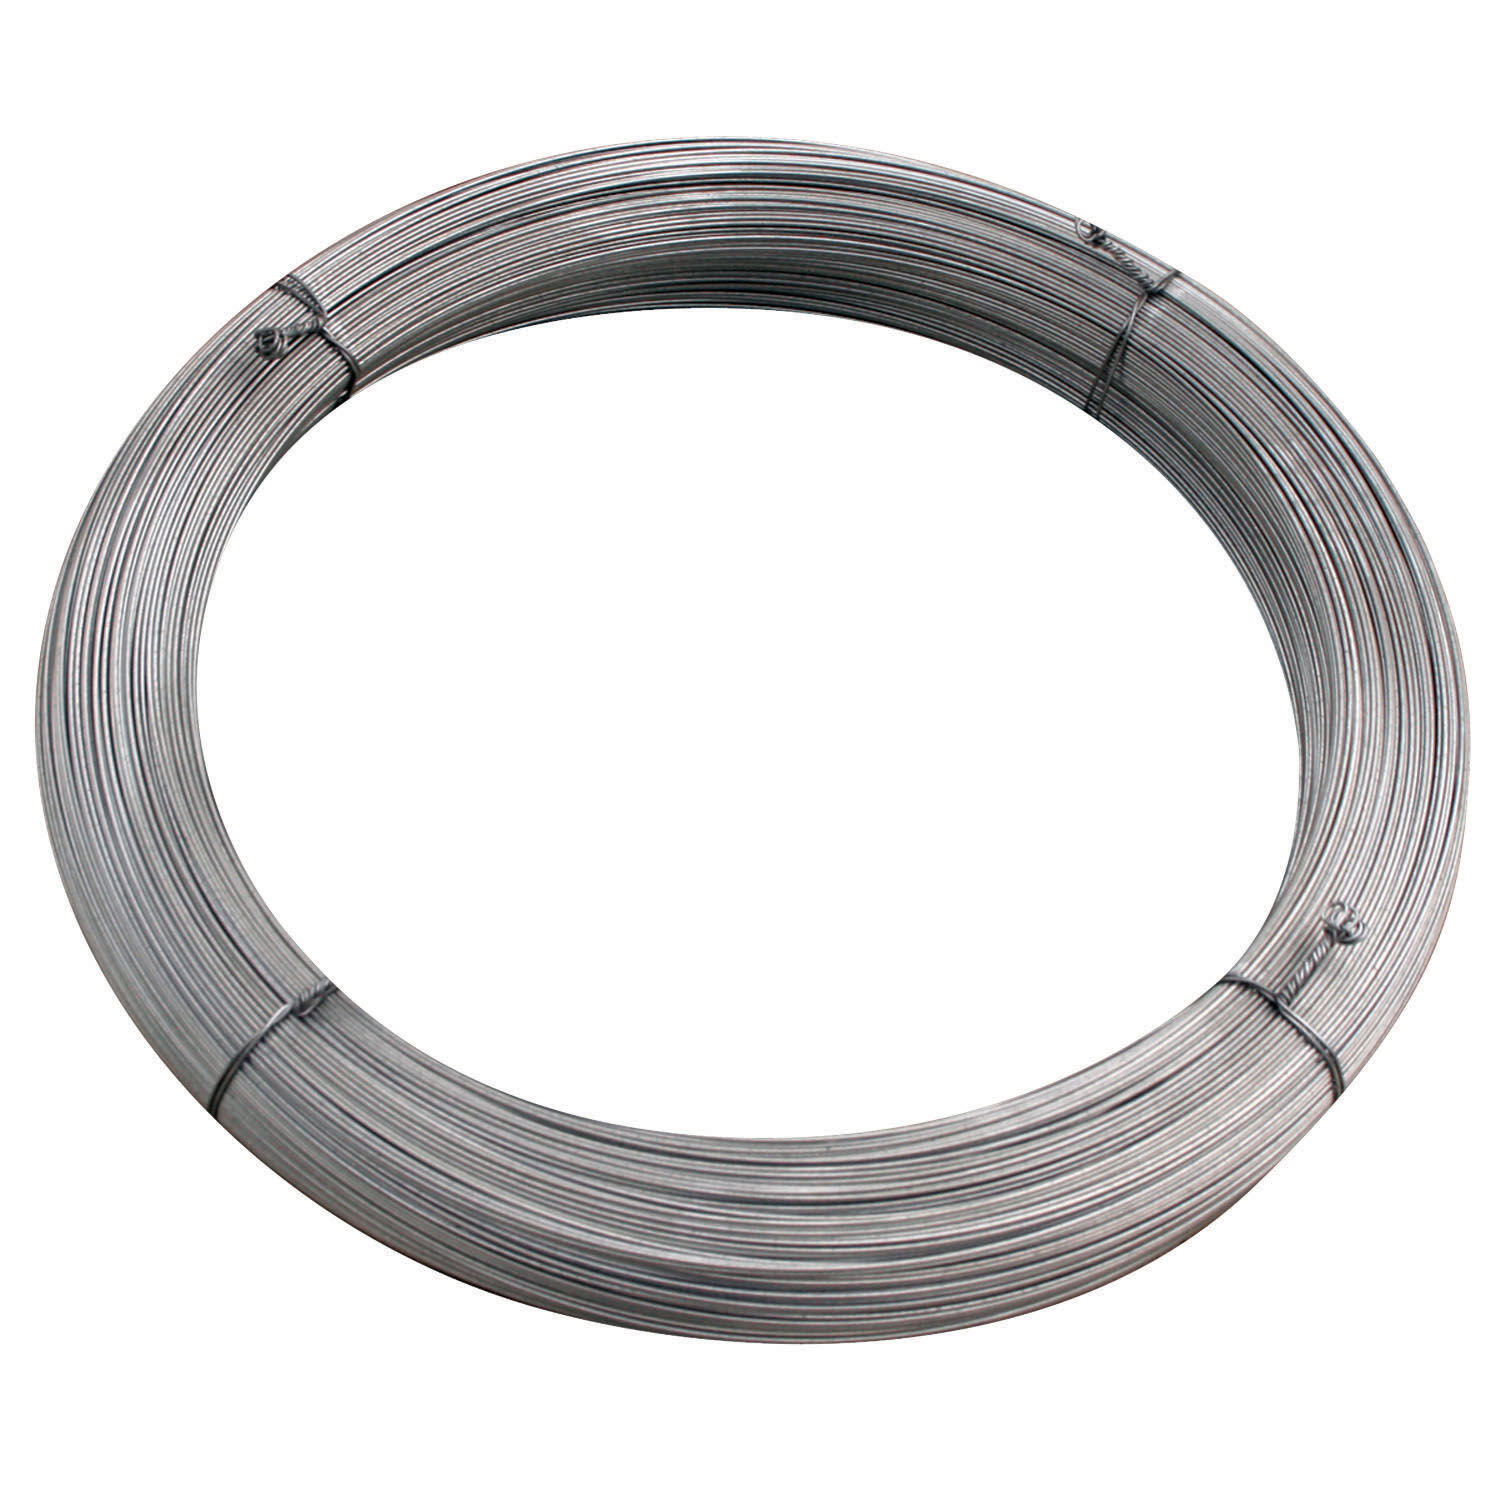 12-1 2 ga High-Tensile Wire 2000 Coil